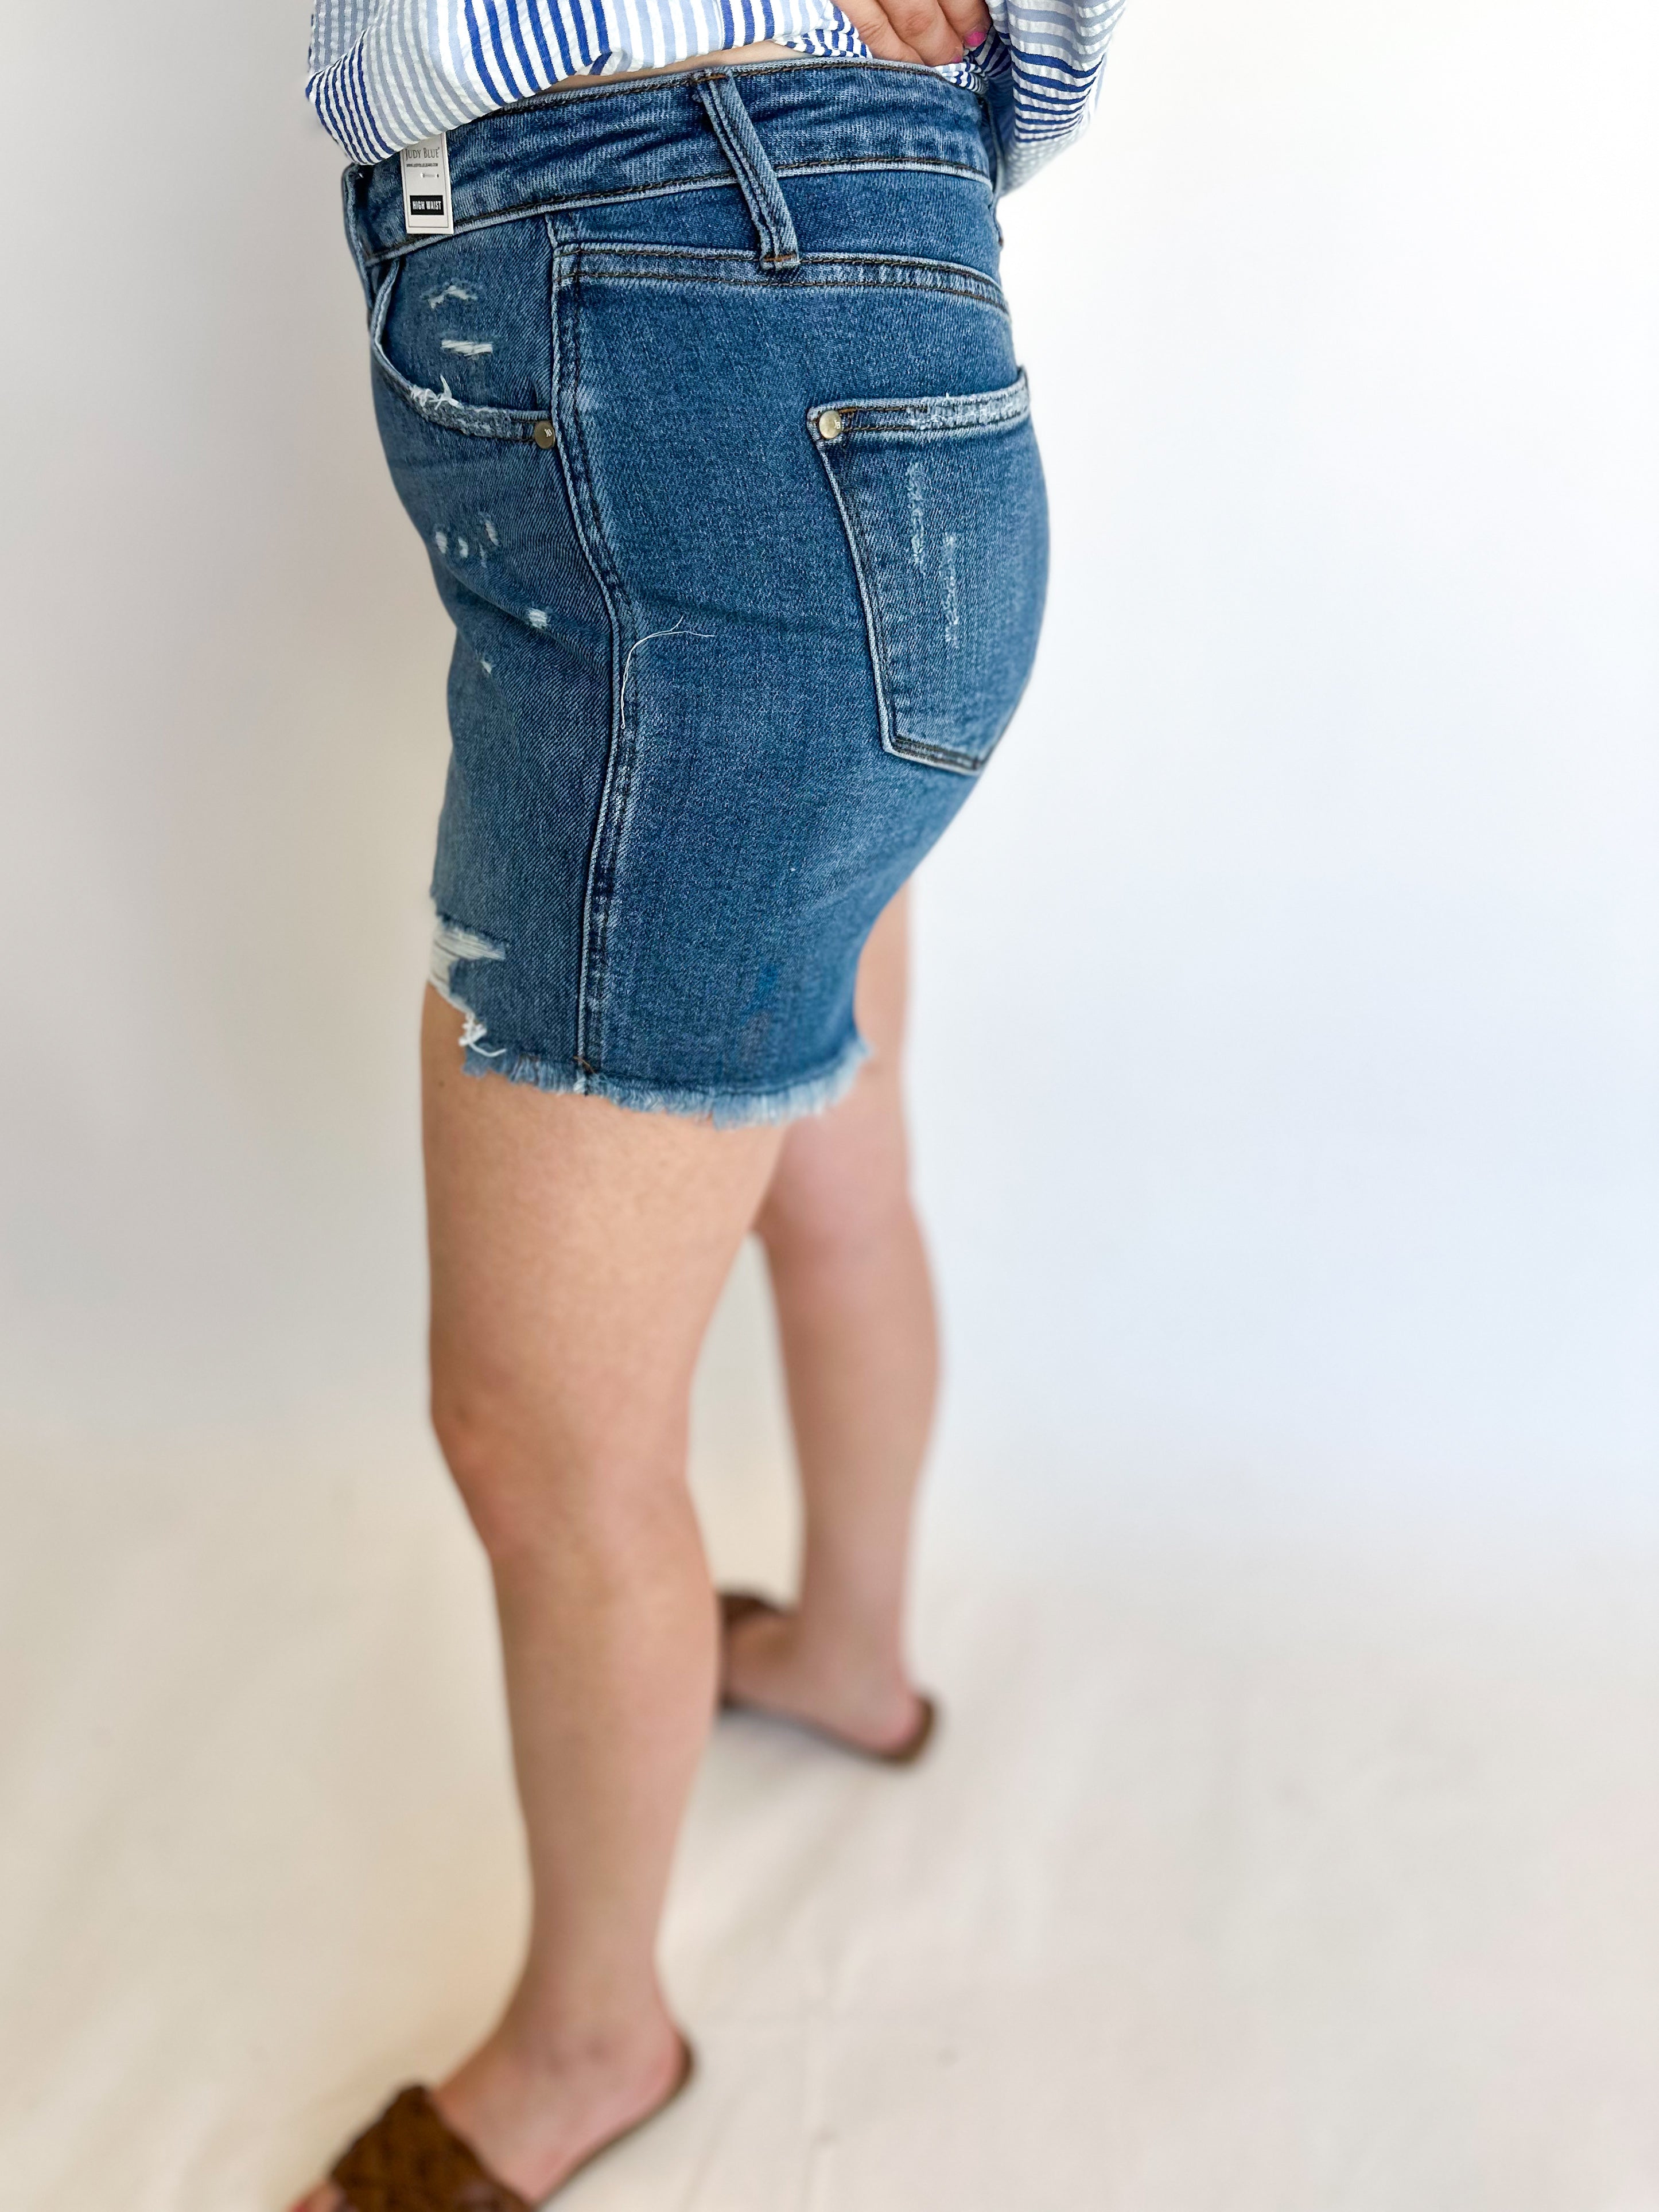 Judy Blue Ridged Magic Denim Shorts-410 Shorts/Skirts-JUDY BLUE-July & June Women's Fashion Boutique Located in San Antonio, Texas